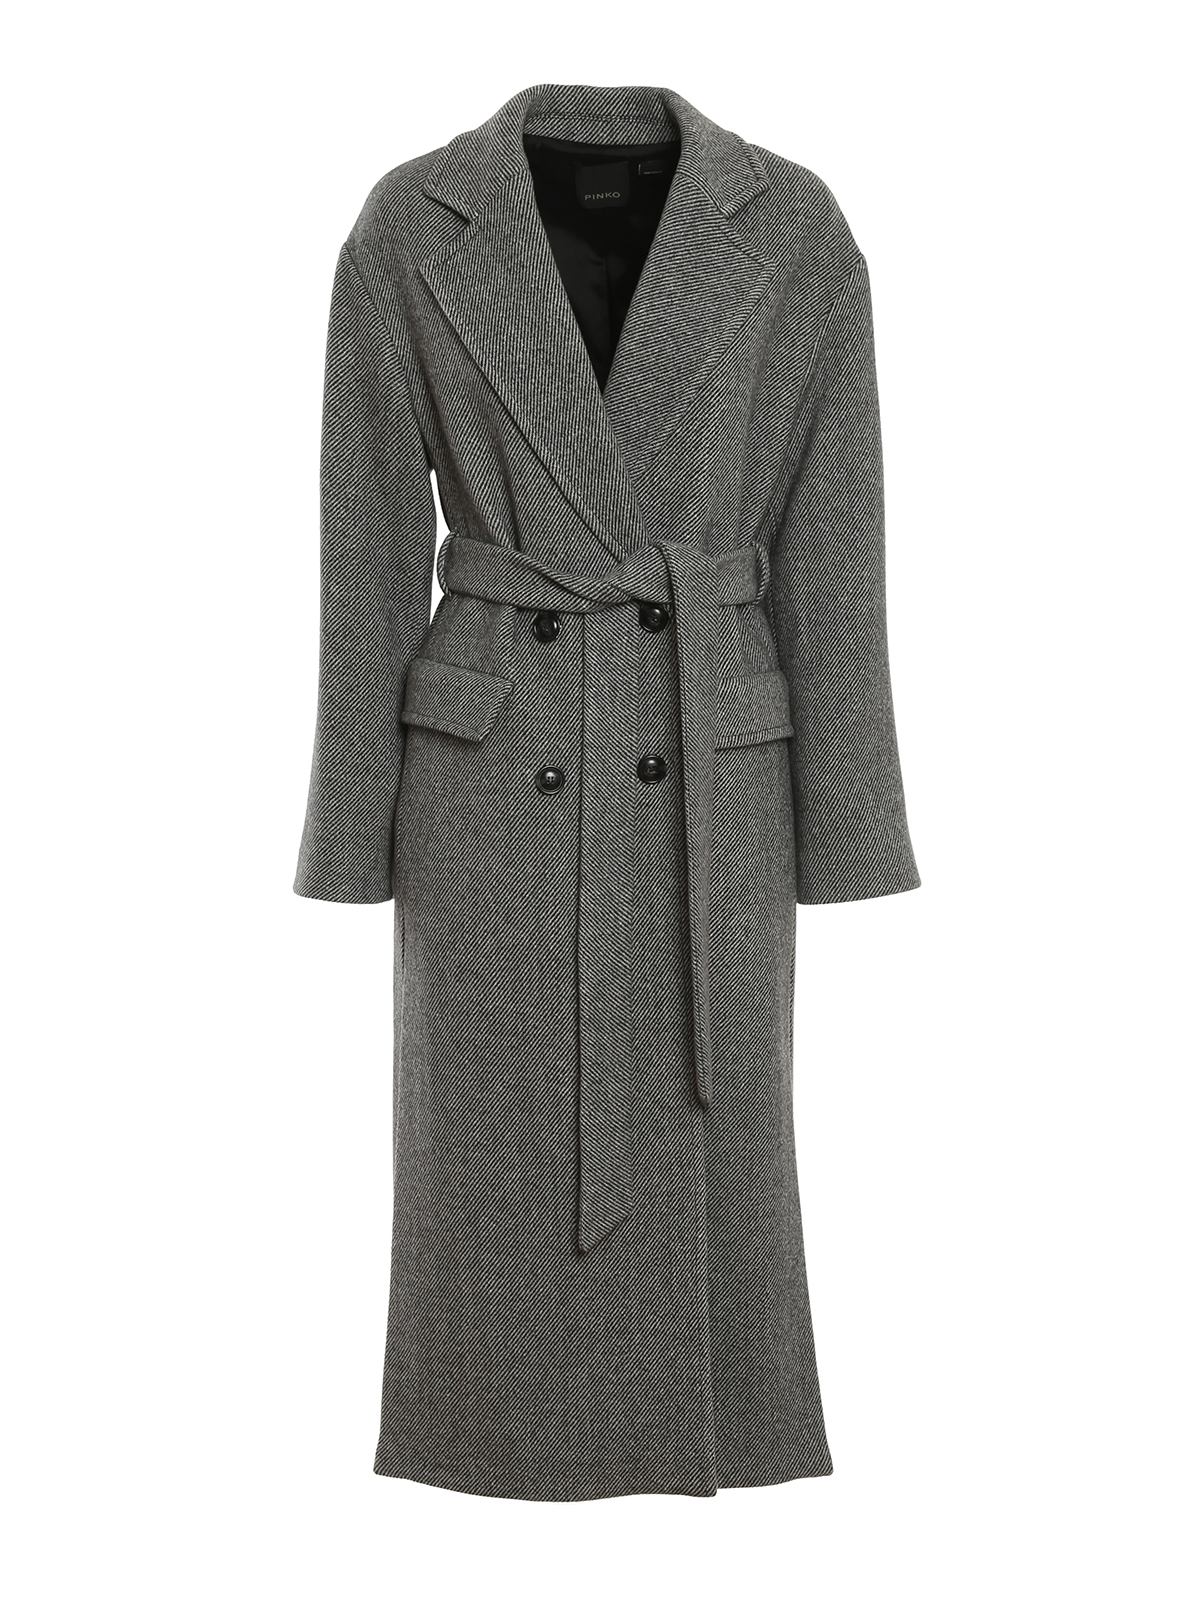 Long coats Pinko - Giacomo 2 coat - 1G16RVY7DYI67 | Shop online at iKRIX